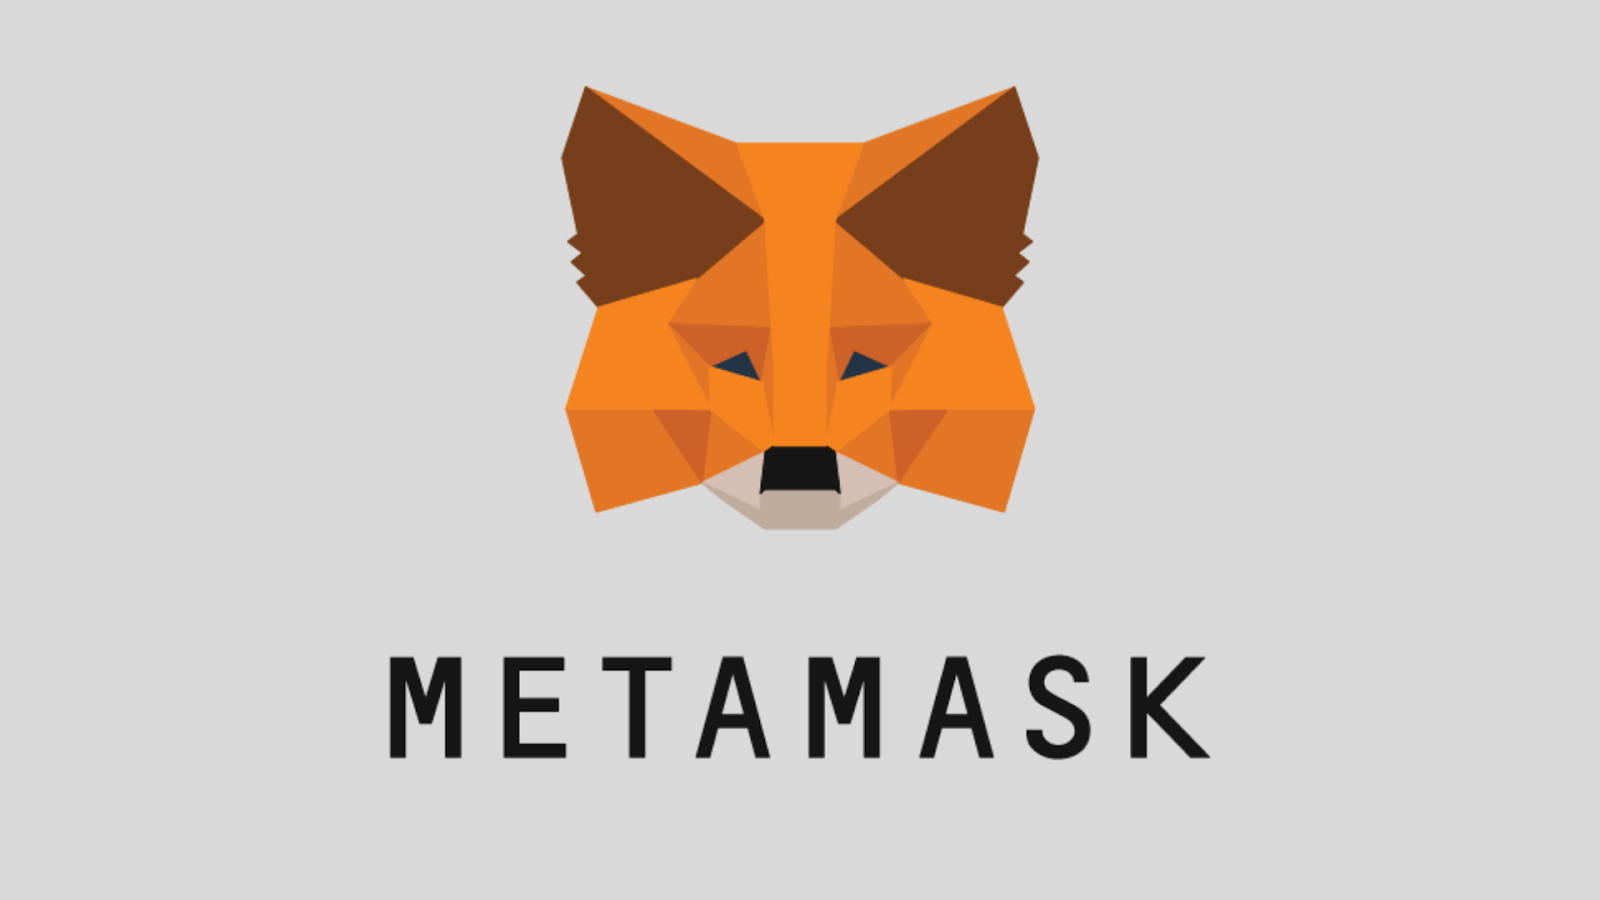 MetaMask leading cryptocurrency wallet